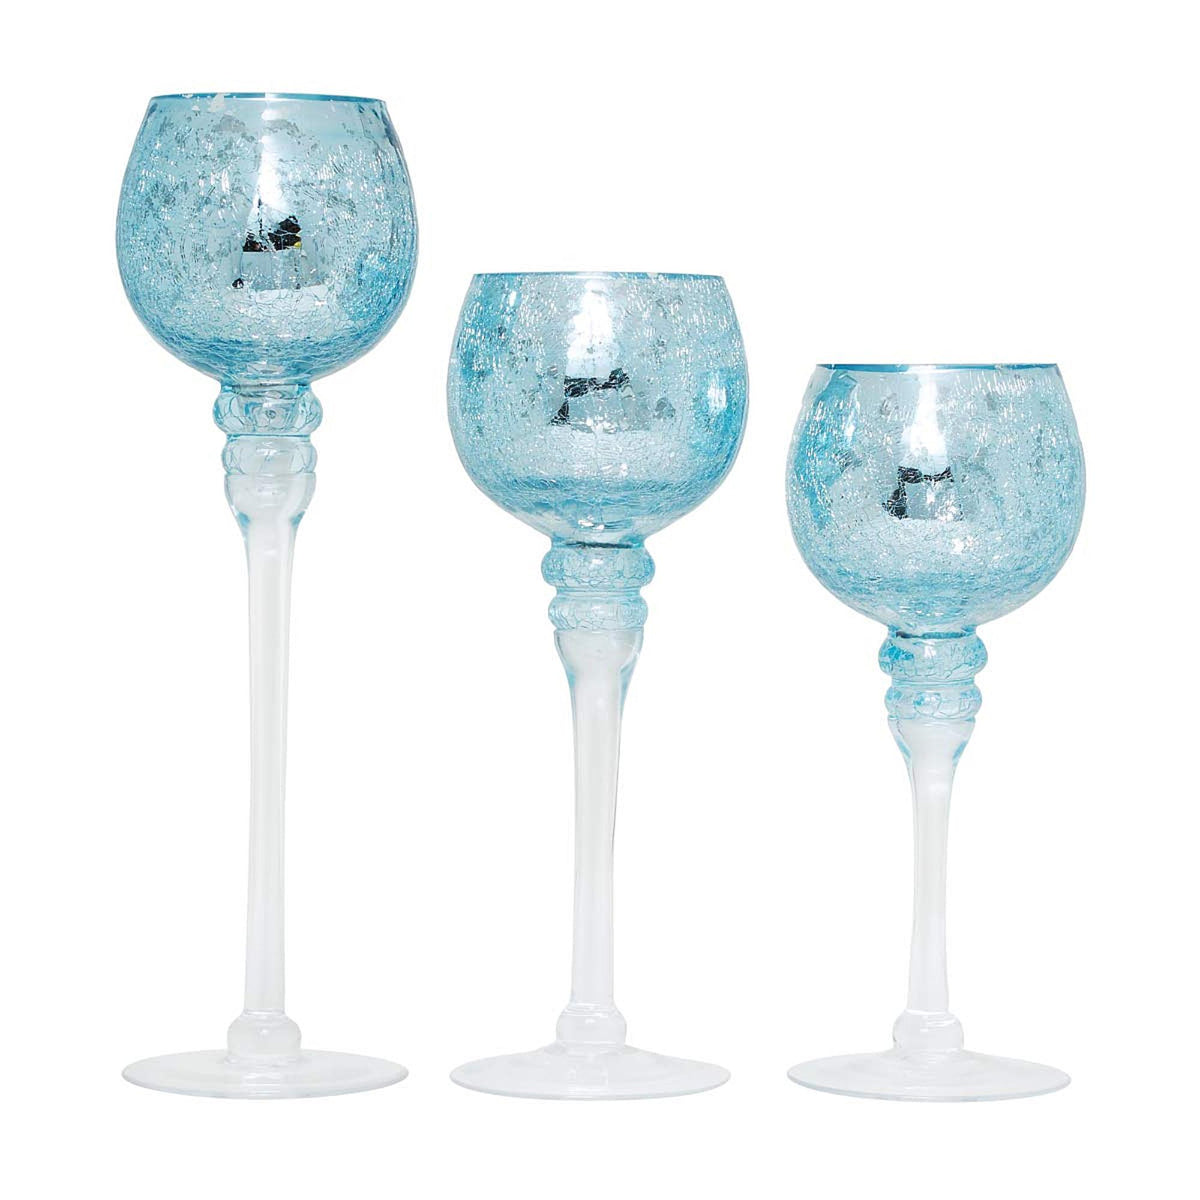 HOSLEY® Long Stem Glass Crackle Tealight Holders, Metallic Blue Finish, Set of 3,   9", 10" & 12"High